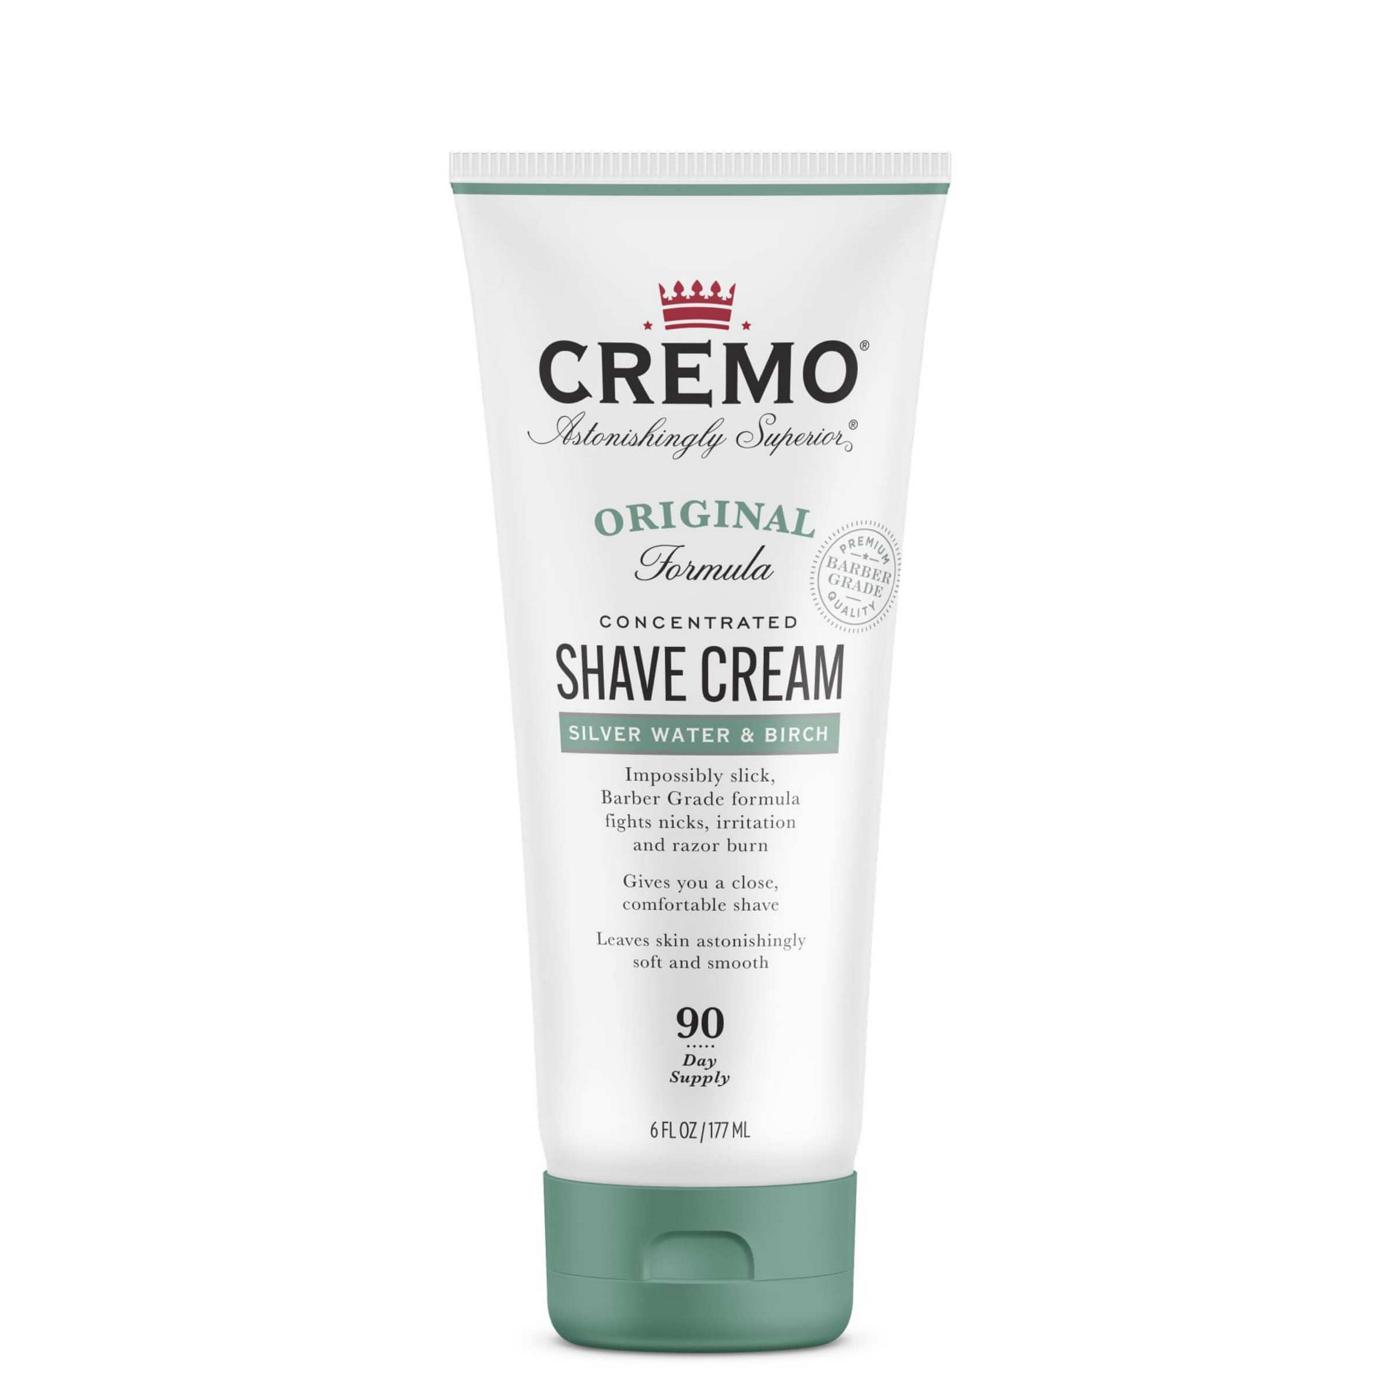 Cremo Shave Cream - Silver Water & Birch; image 1 of 7